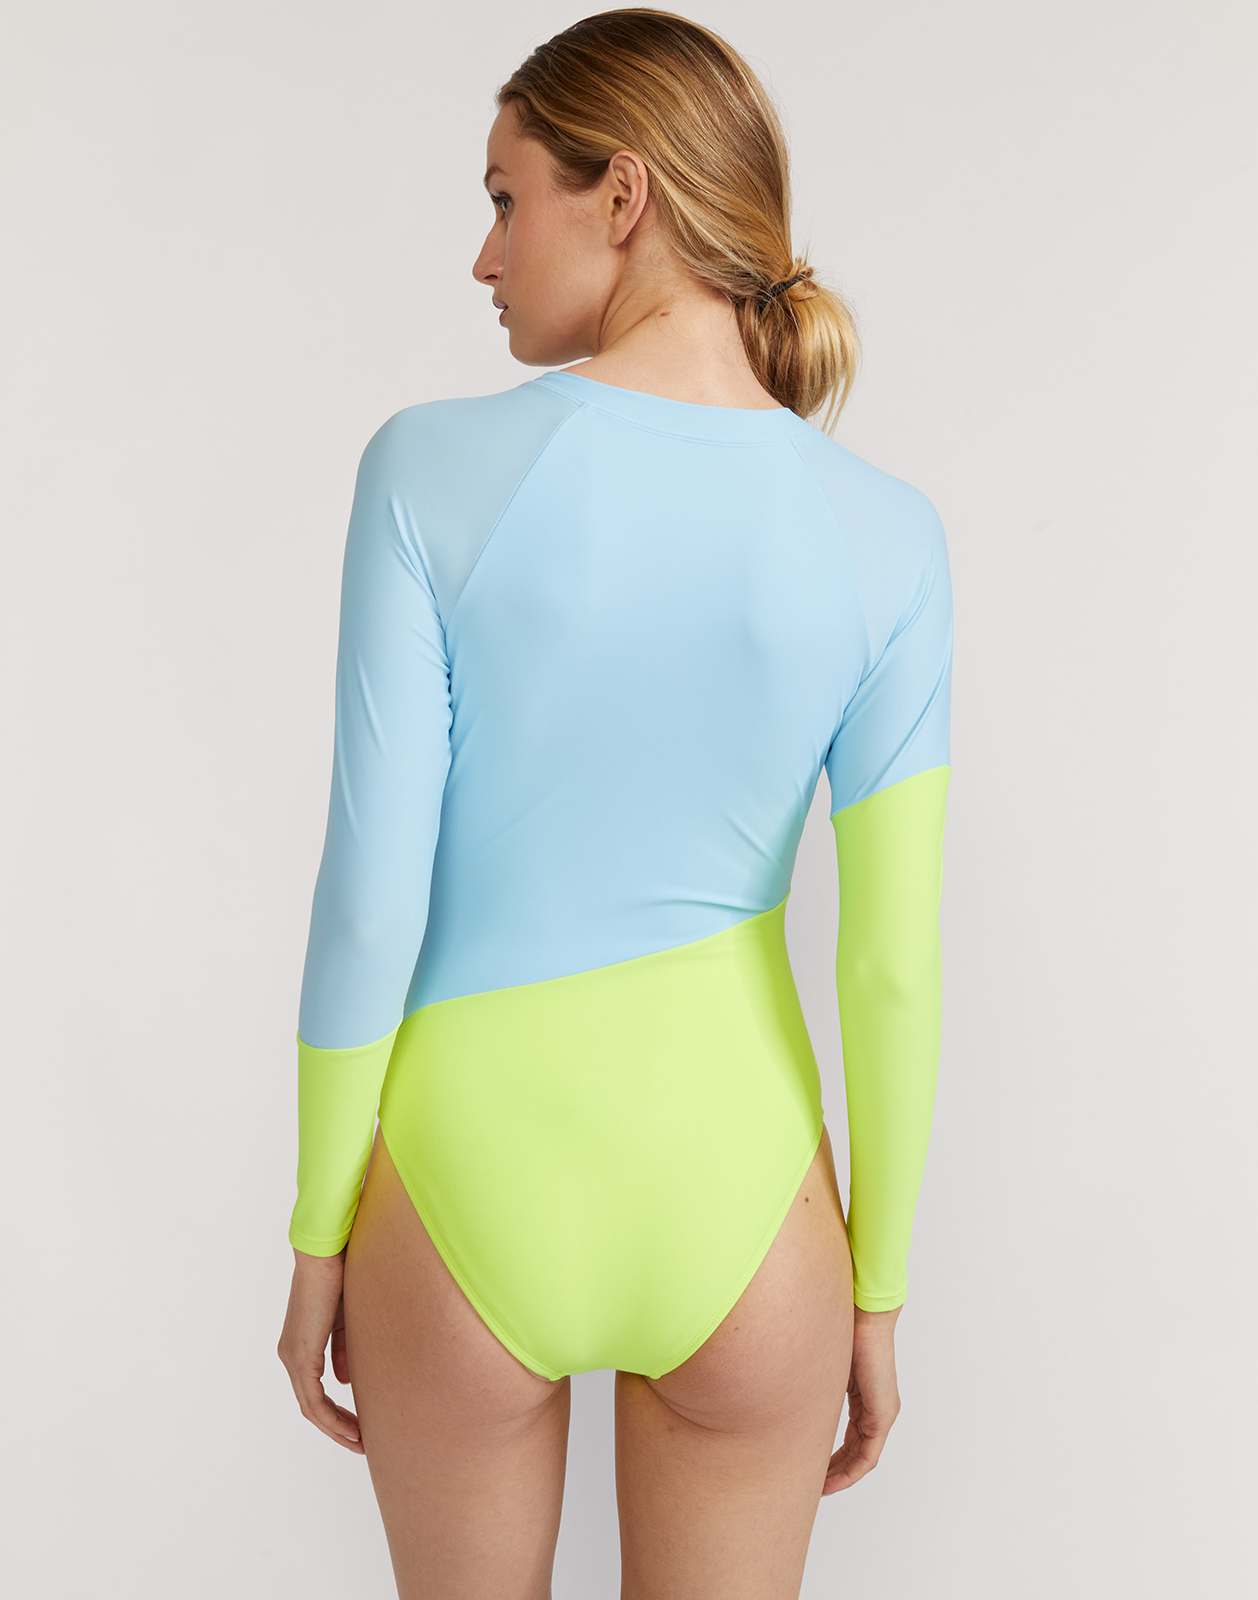 Stylish Cynthia Rowley Floral Patchwork Swimsuit 3X